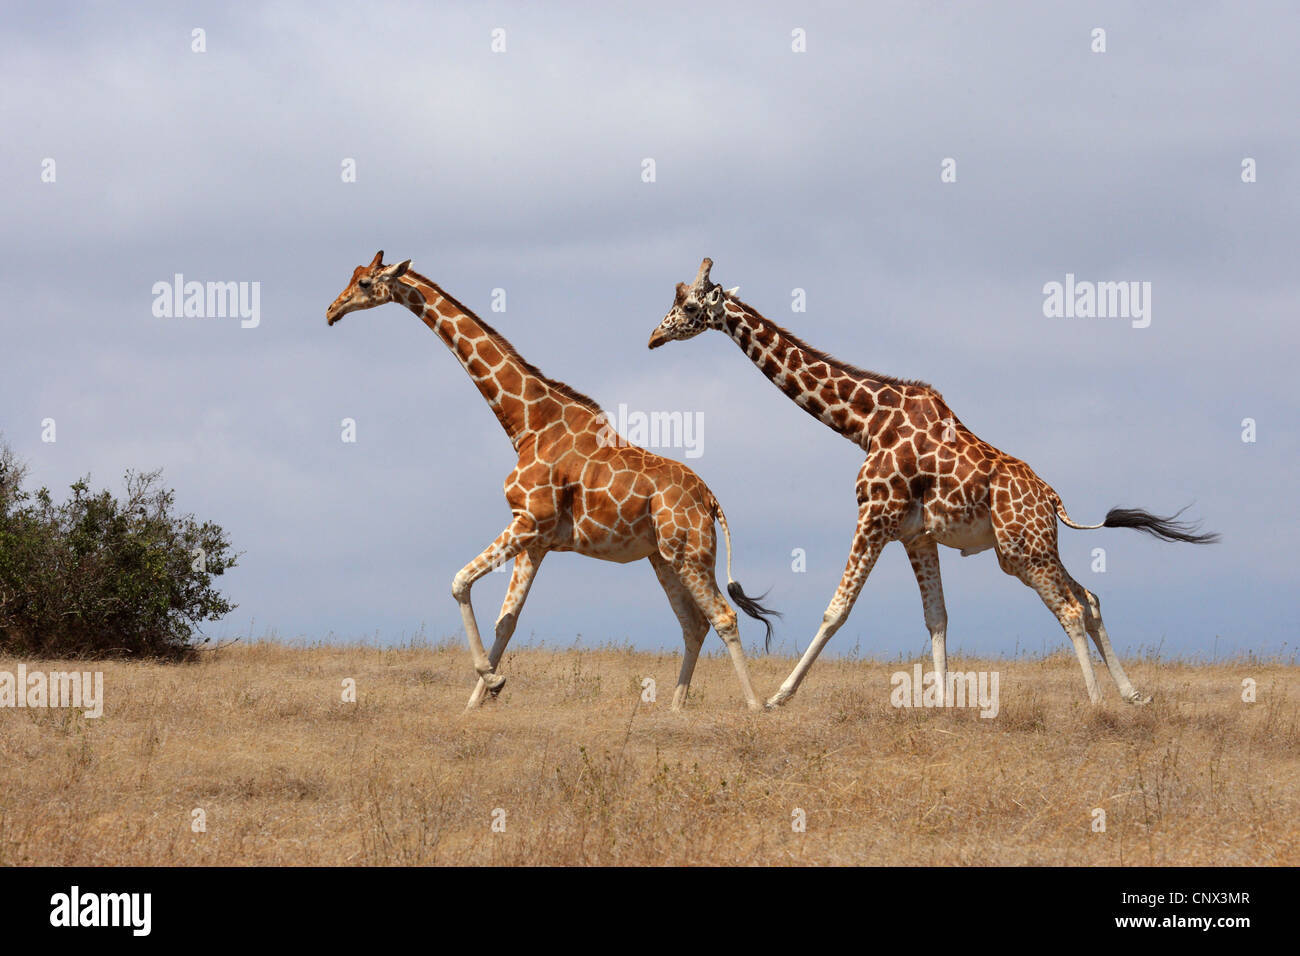 Giraffe réticulée (Giraffa camelopardalis reticulata), deux girafes à travers la savane, Kenya, Sweetwater Game Reserve Banque D'Images